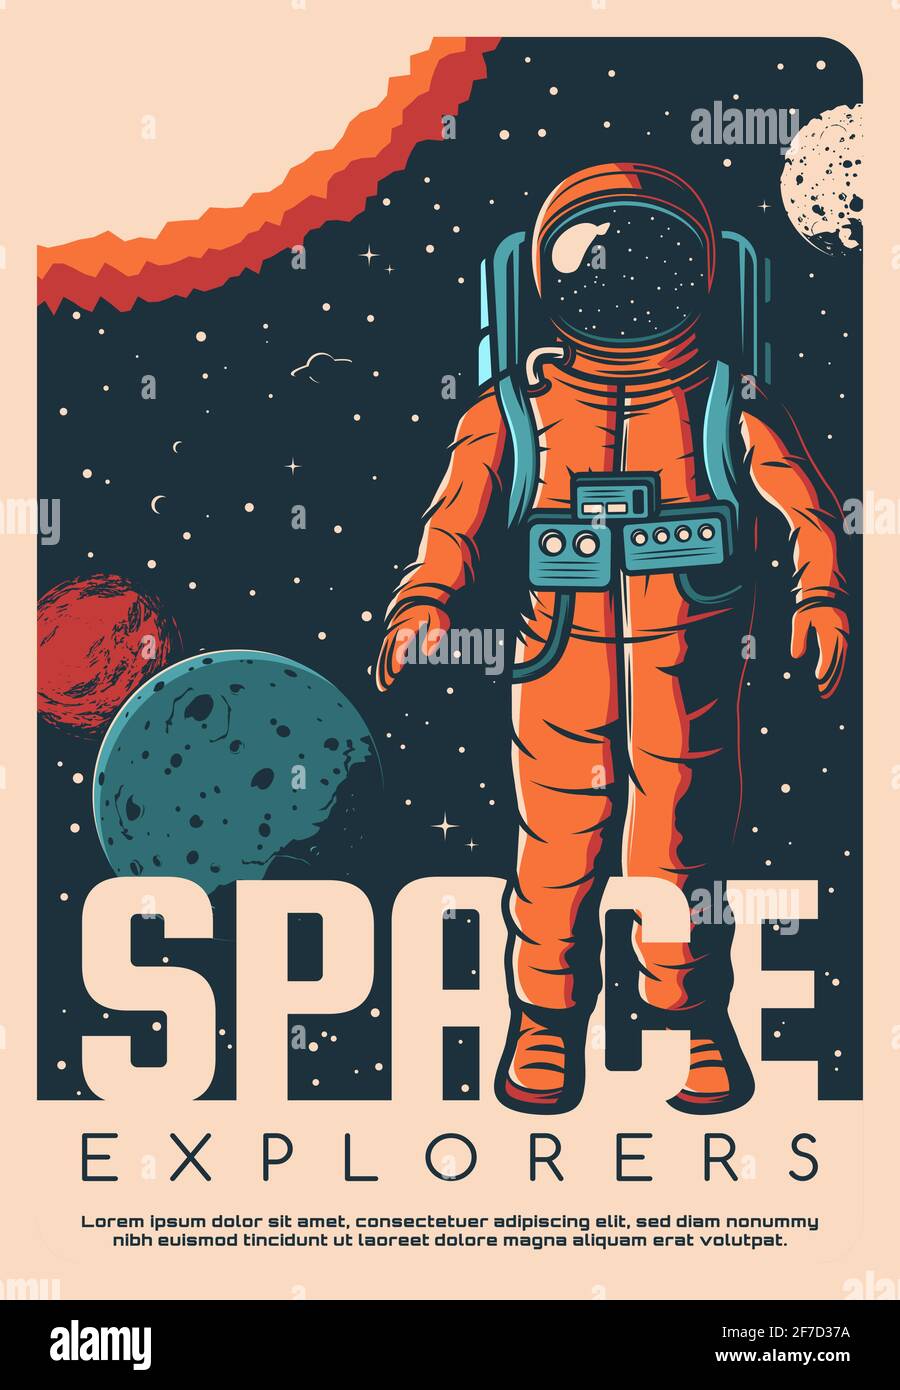 Astronaut in space suit, space explorer poster Stock Vector & Art - Alamy